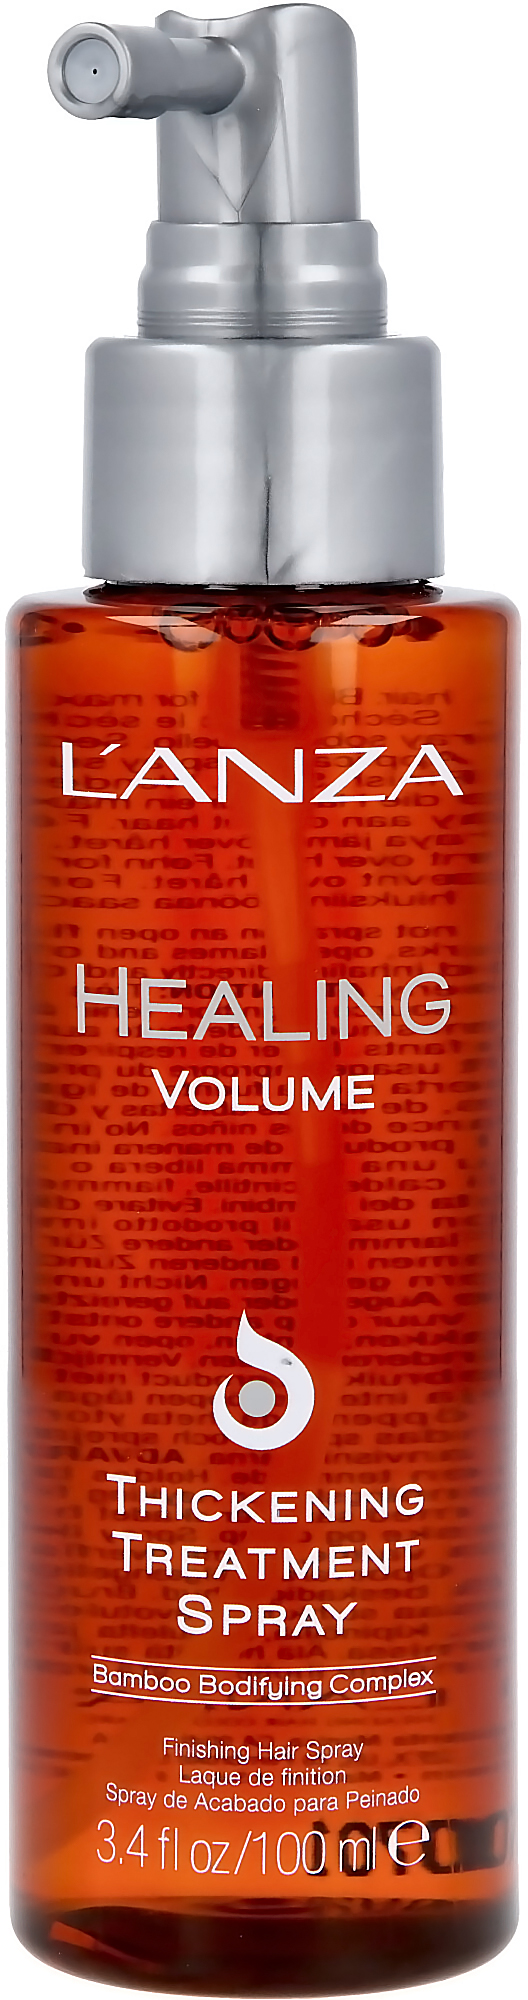 Lanza Healing Volume Thickening Treatment